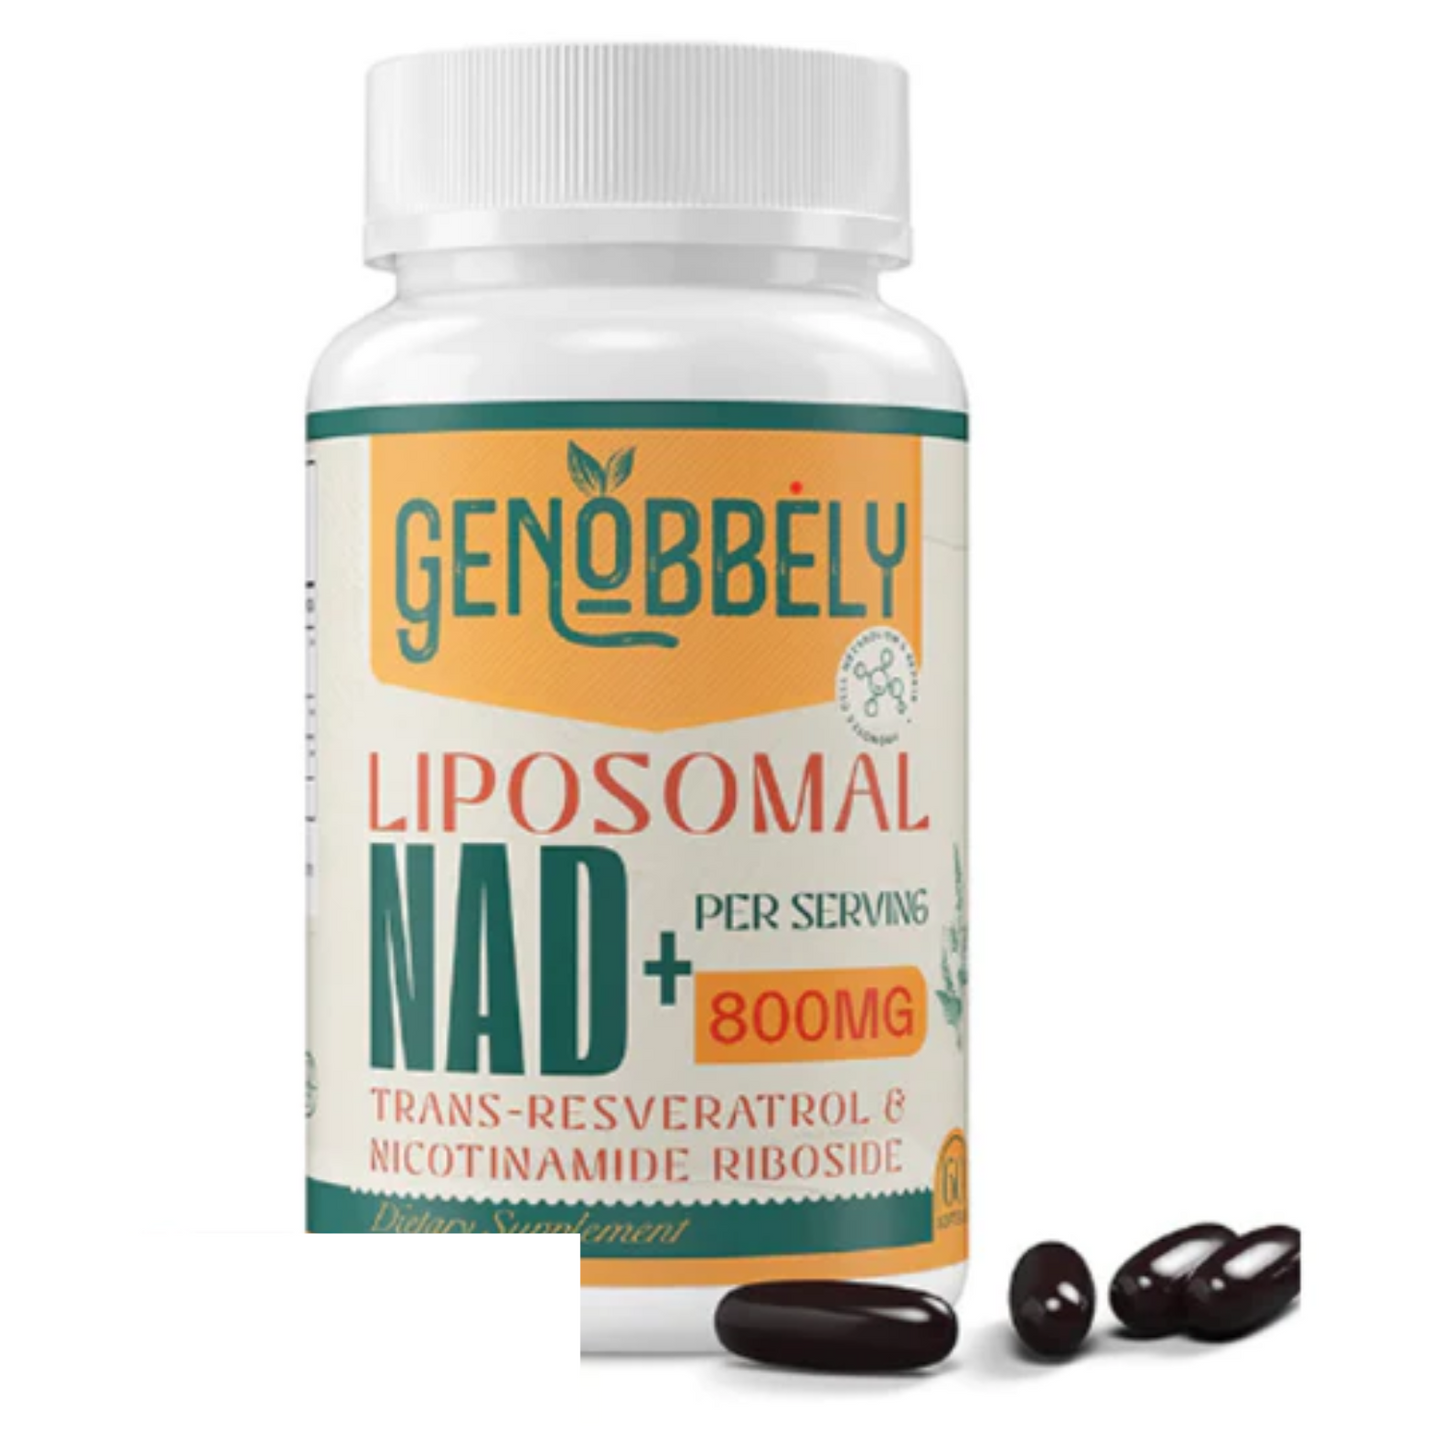 NAD+ LIPOSOMAL  800 MG 60 CAPSULAS BLANDAS SIN GMO GENOBBELY